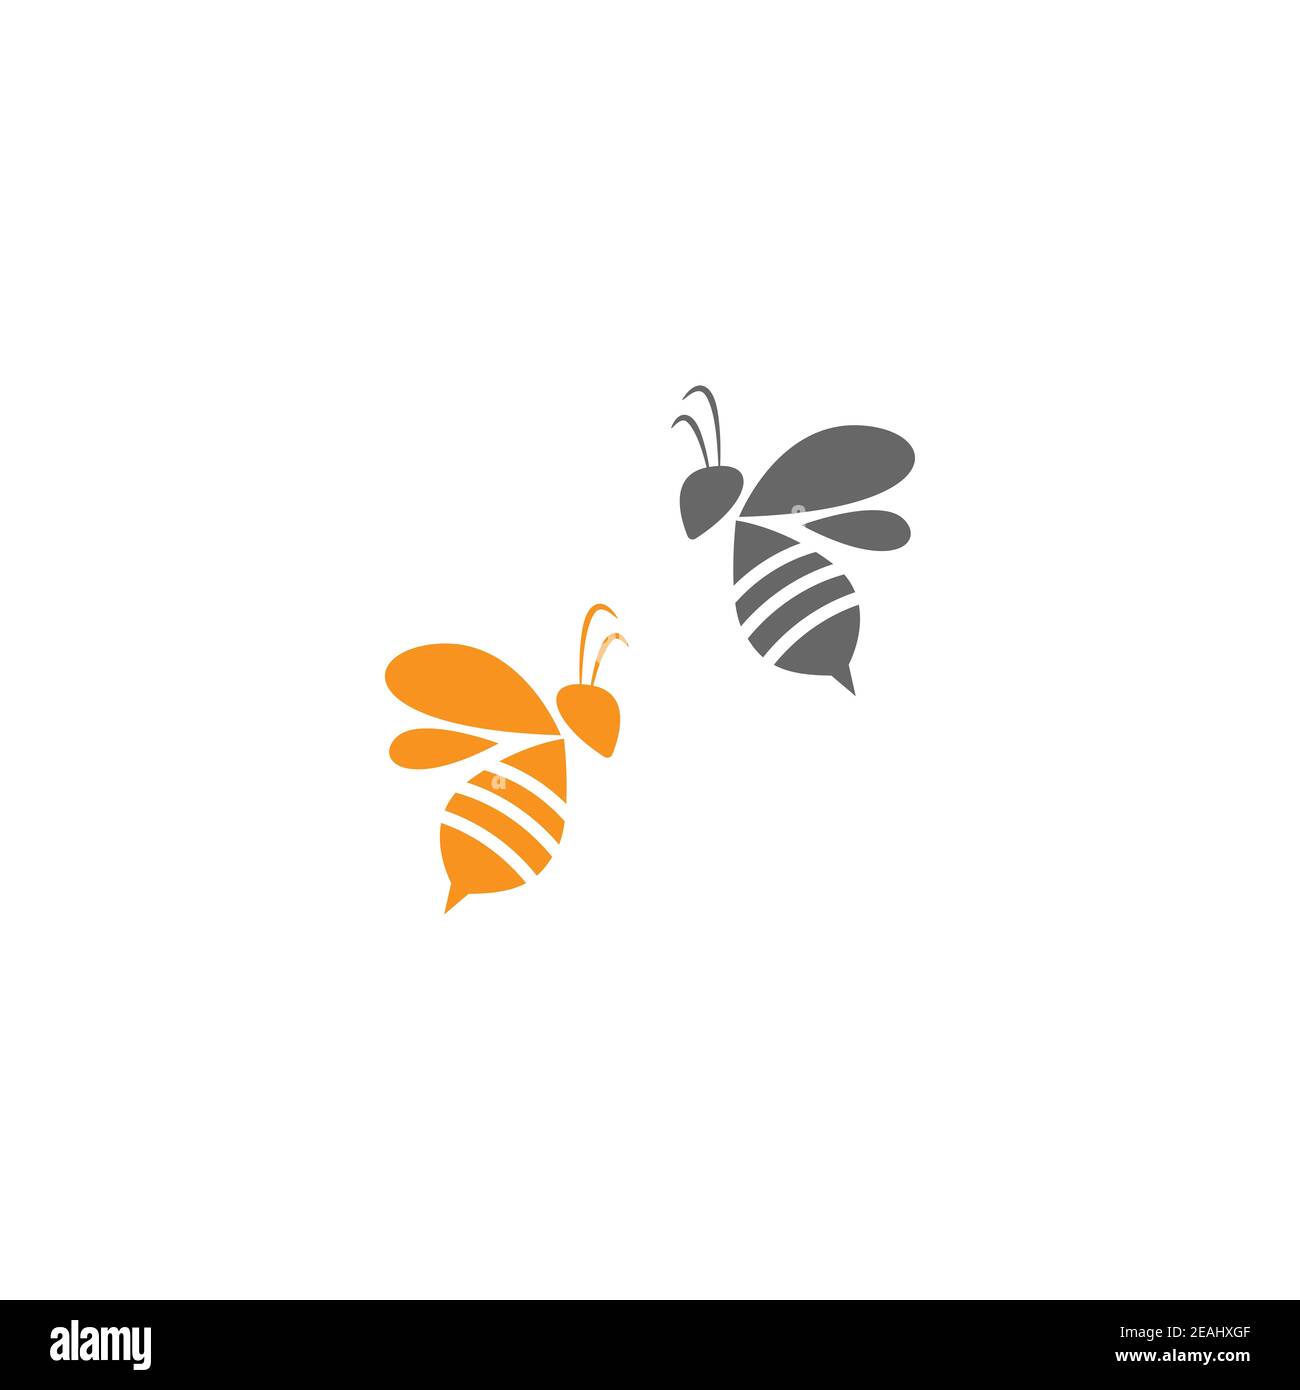 Bee logo icon creative design Stock Photo